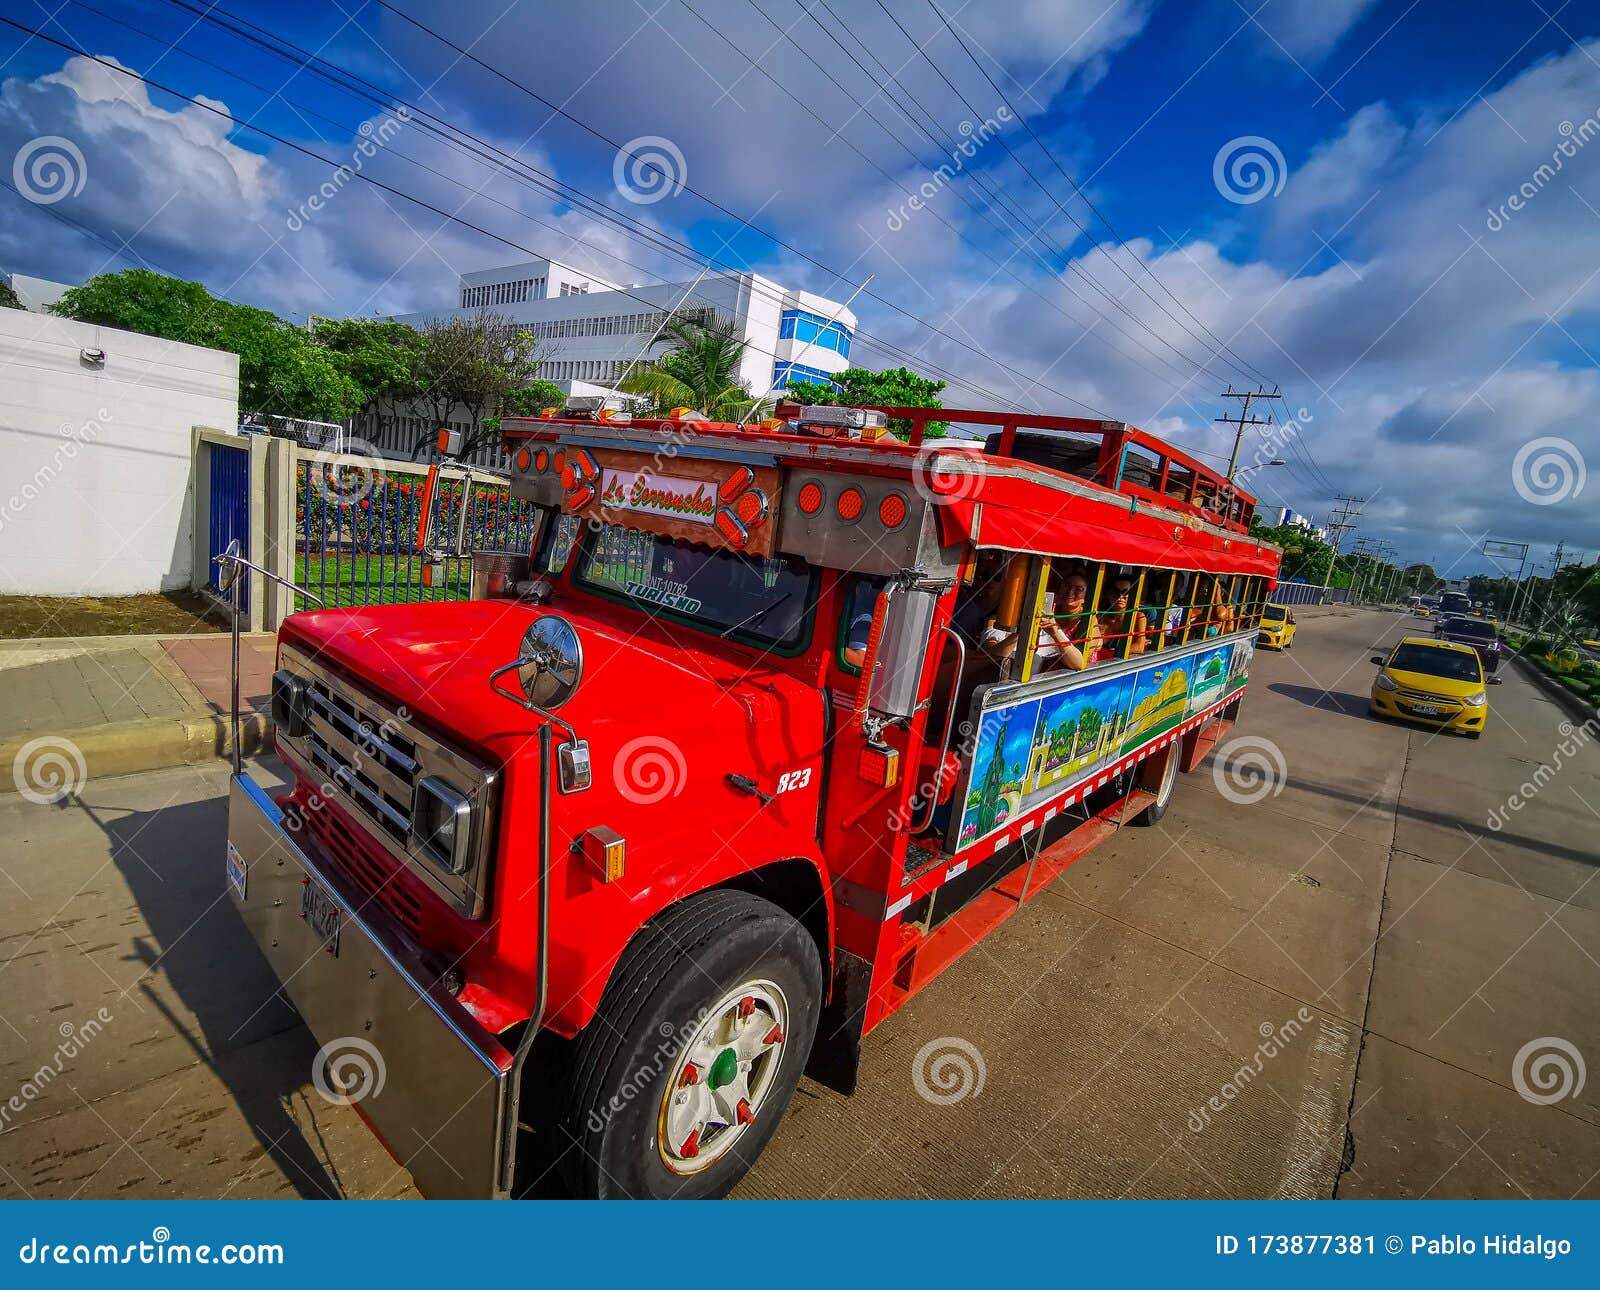 colombia tourist bus